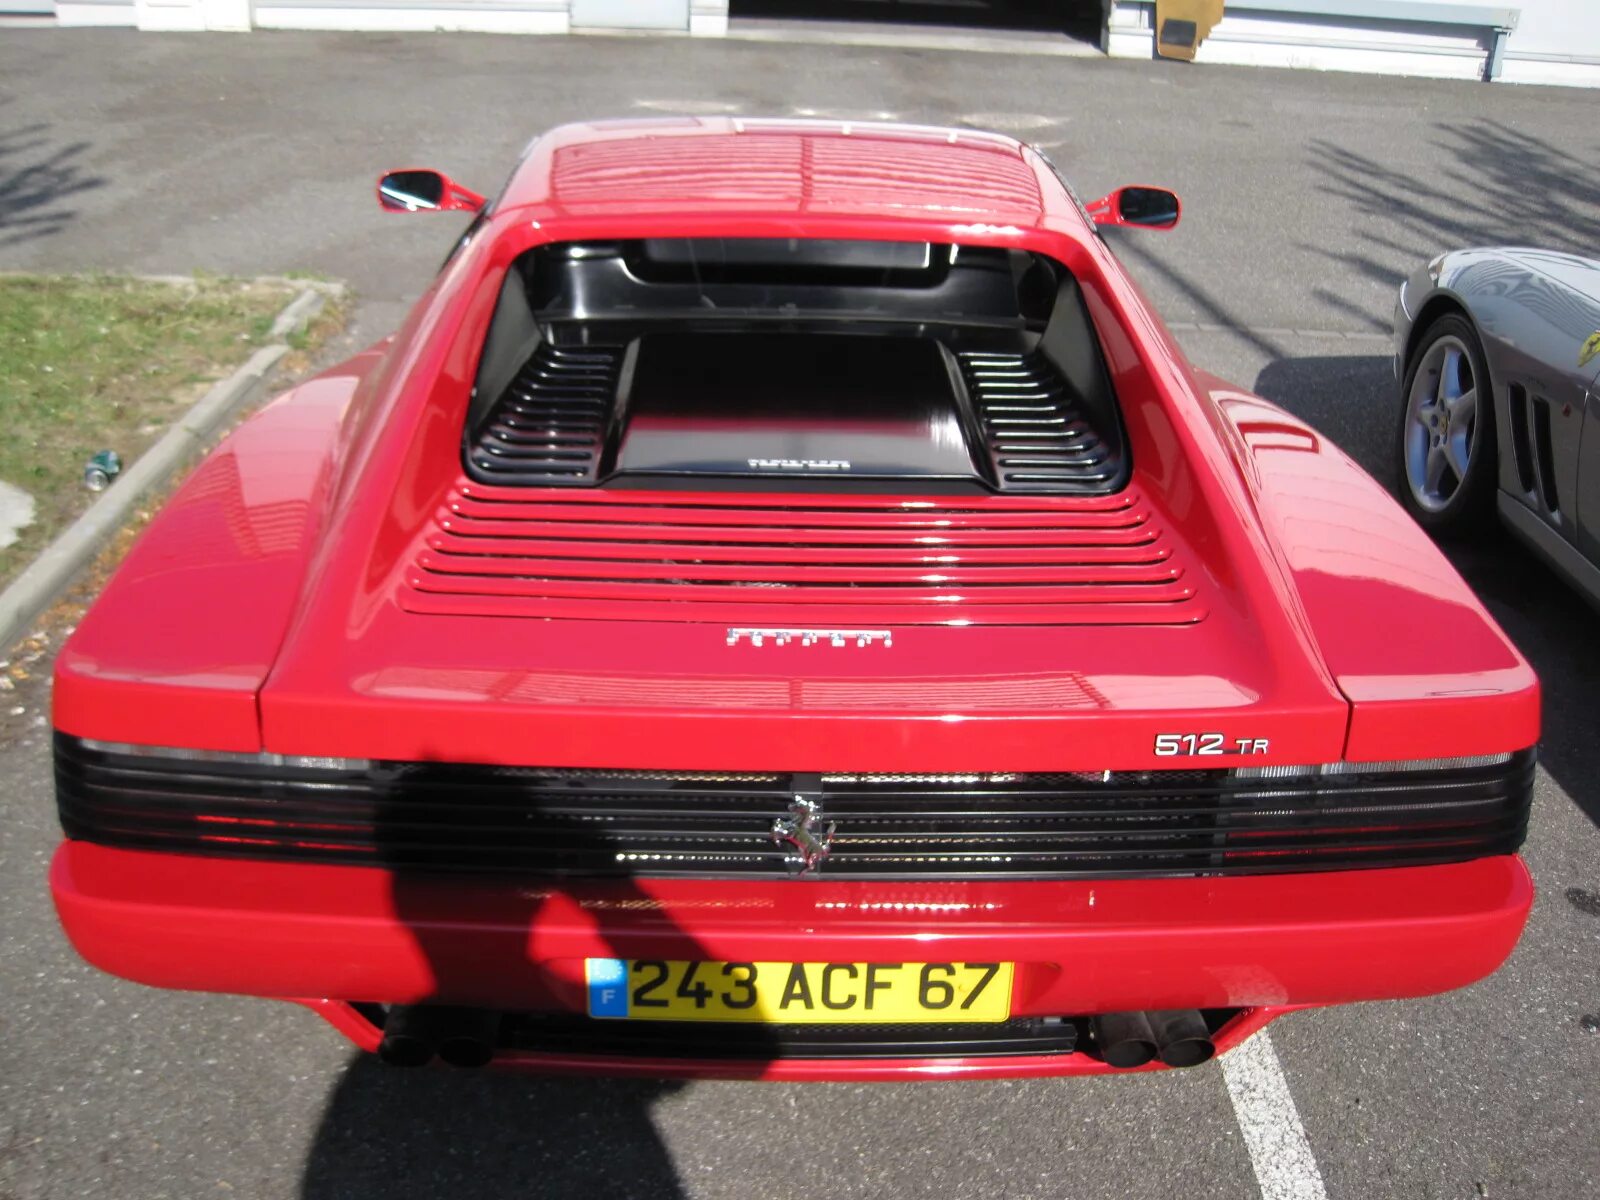 Ferrari 512. Ferrari Testarossa 512tr. Ferrari 512 tr. Феррари 512tr реплика.